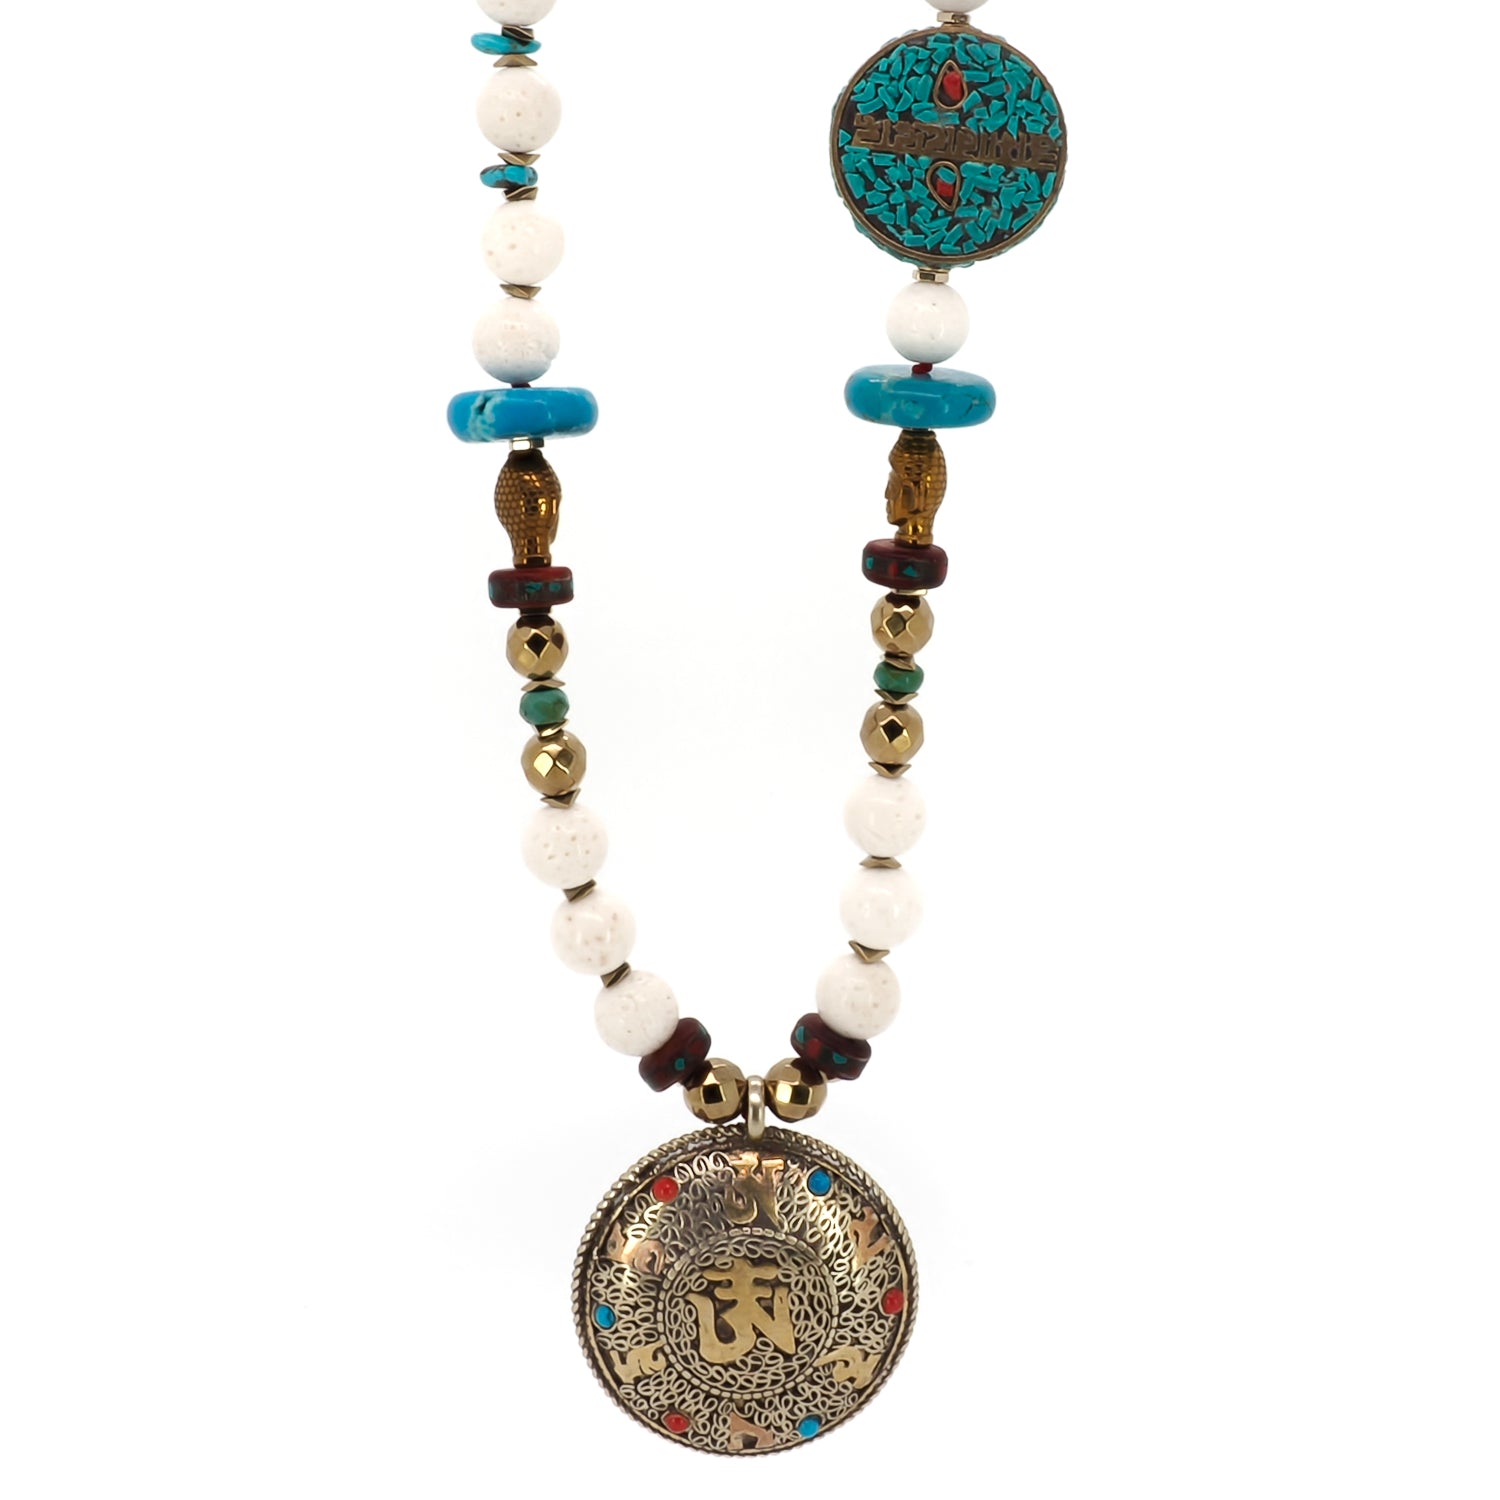 Tranquil Spirit: Handmade Spiritual Buddha Mantra Necklace adorned with natural stones.